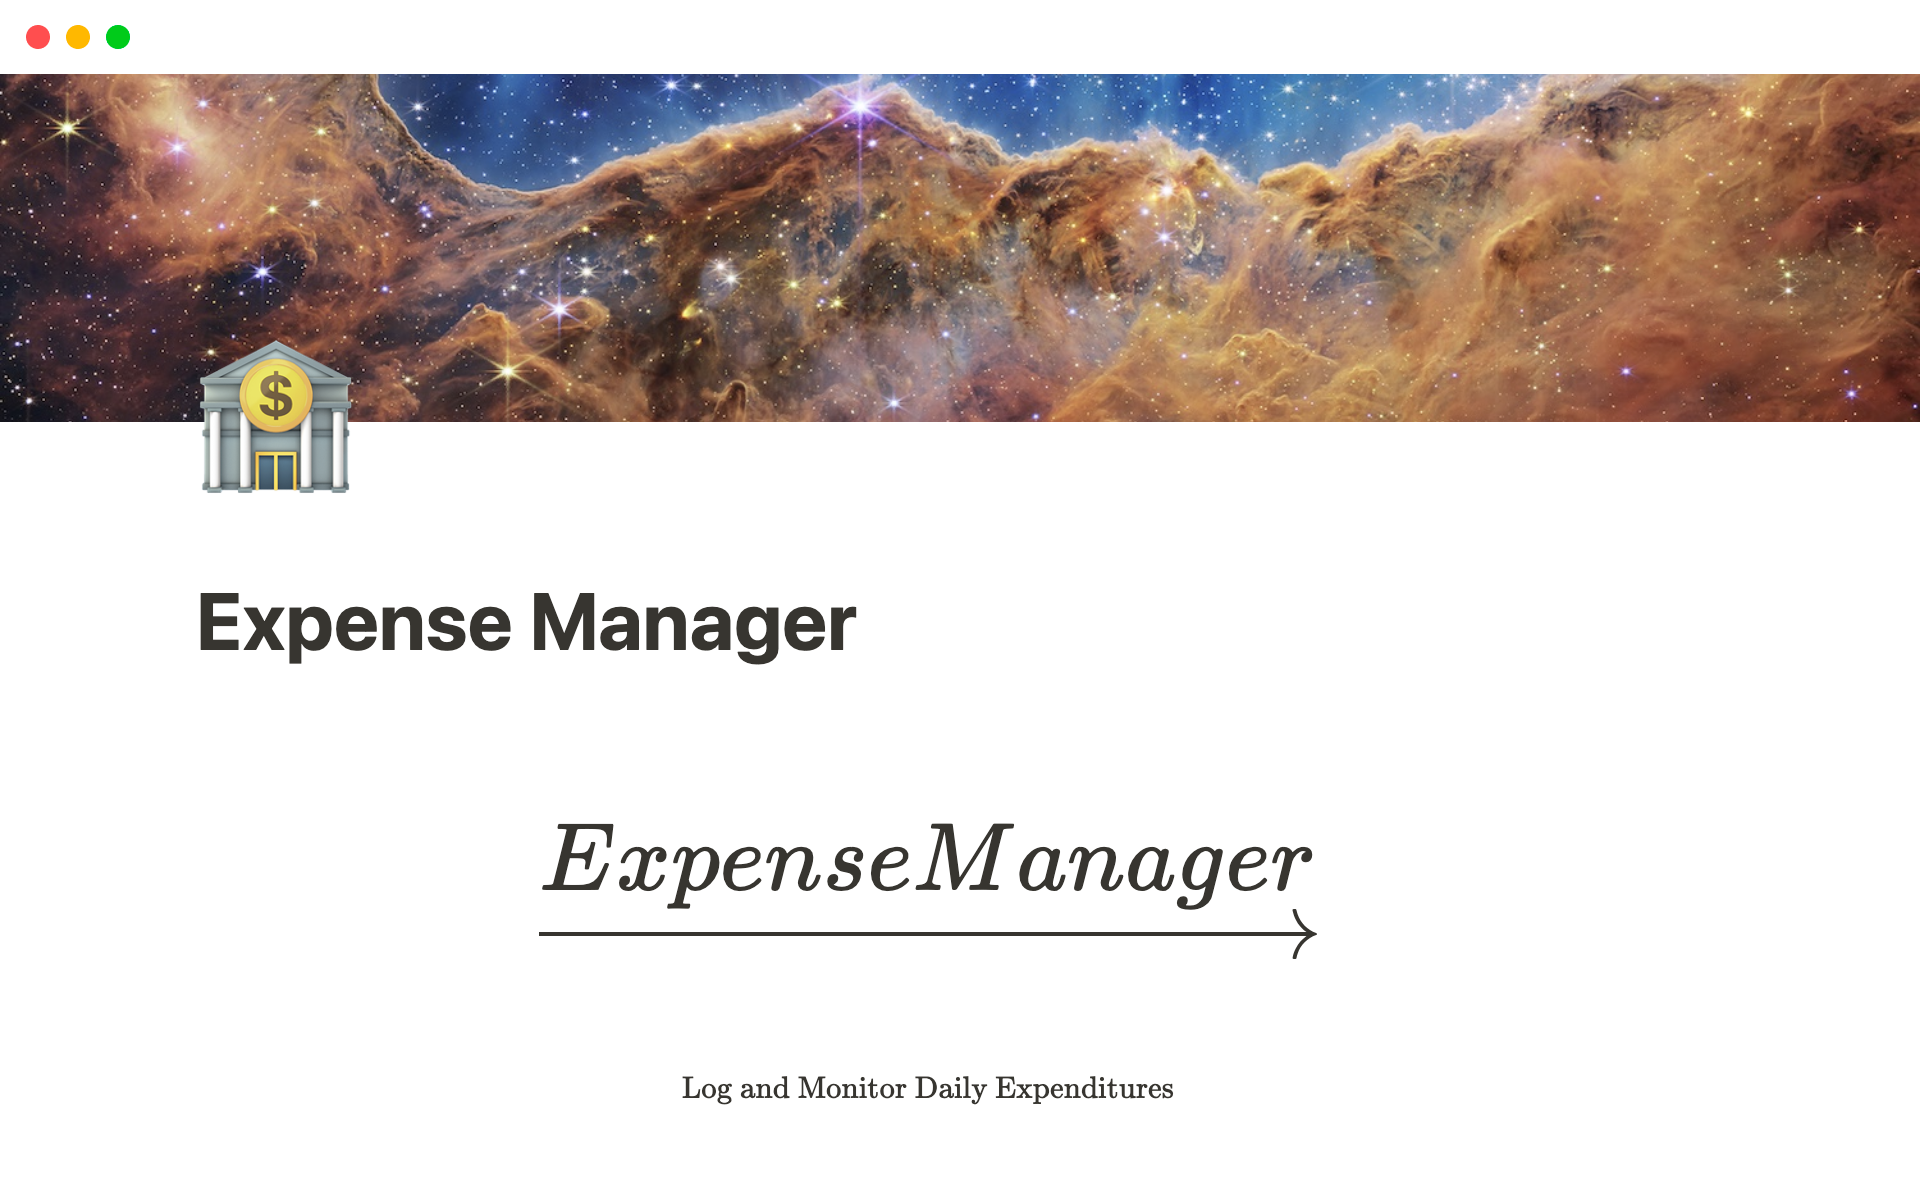 Vista previa de una plantilla para Expense Manager